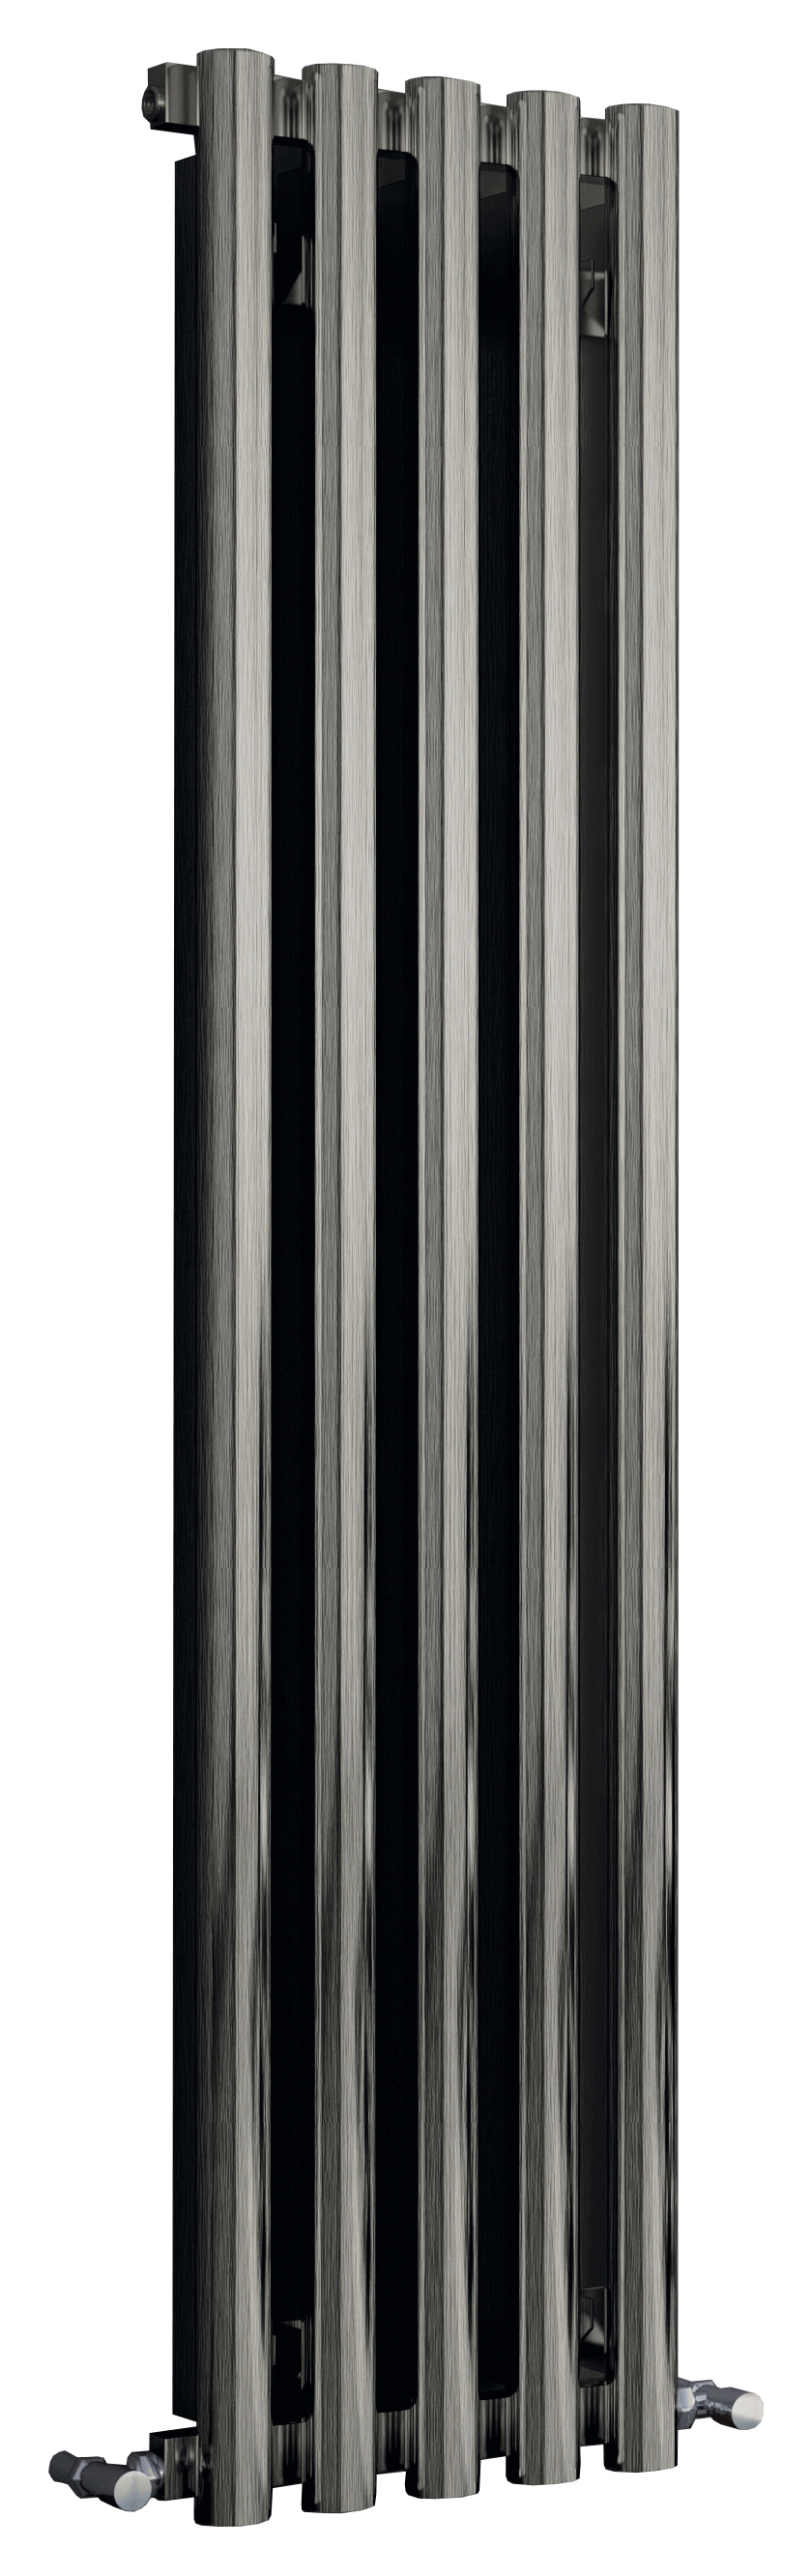 Towelrads Oxshott Vertical Aluminium Designer Radiator - Silver 1800mm - Various Widths Available